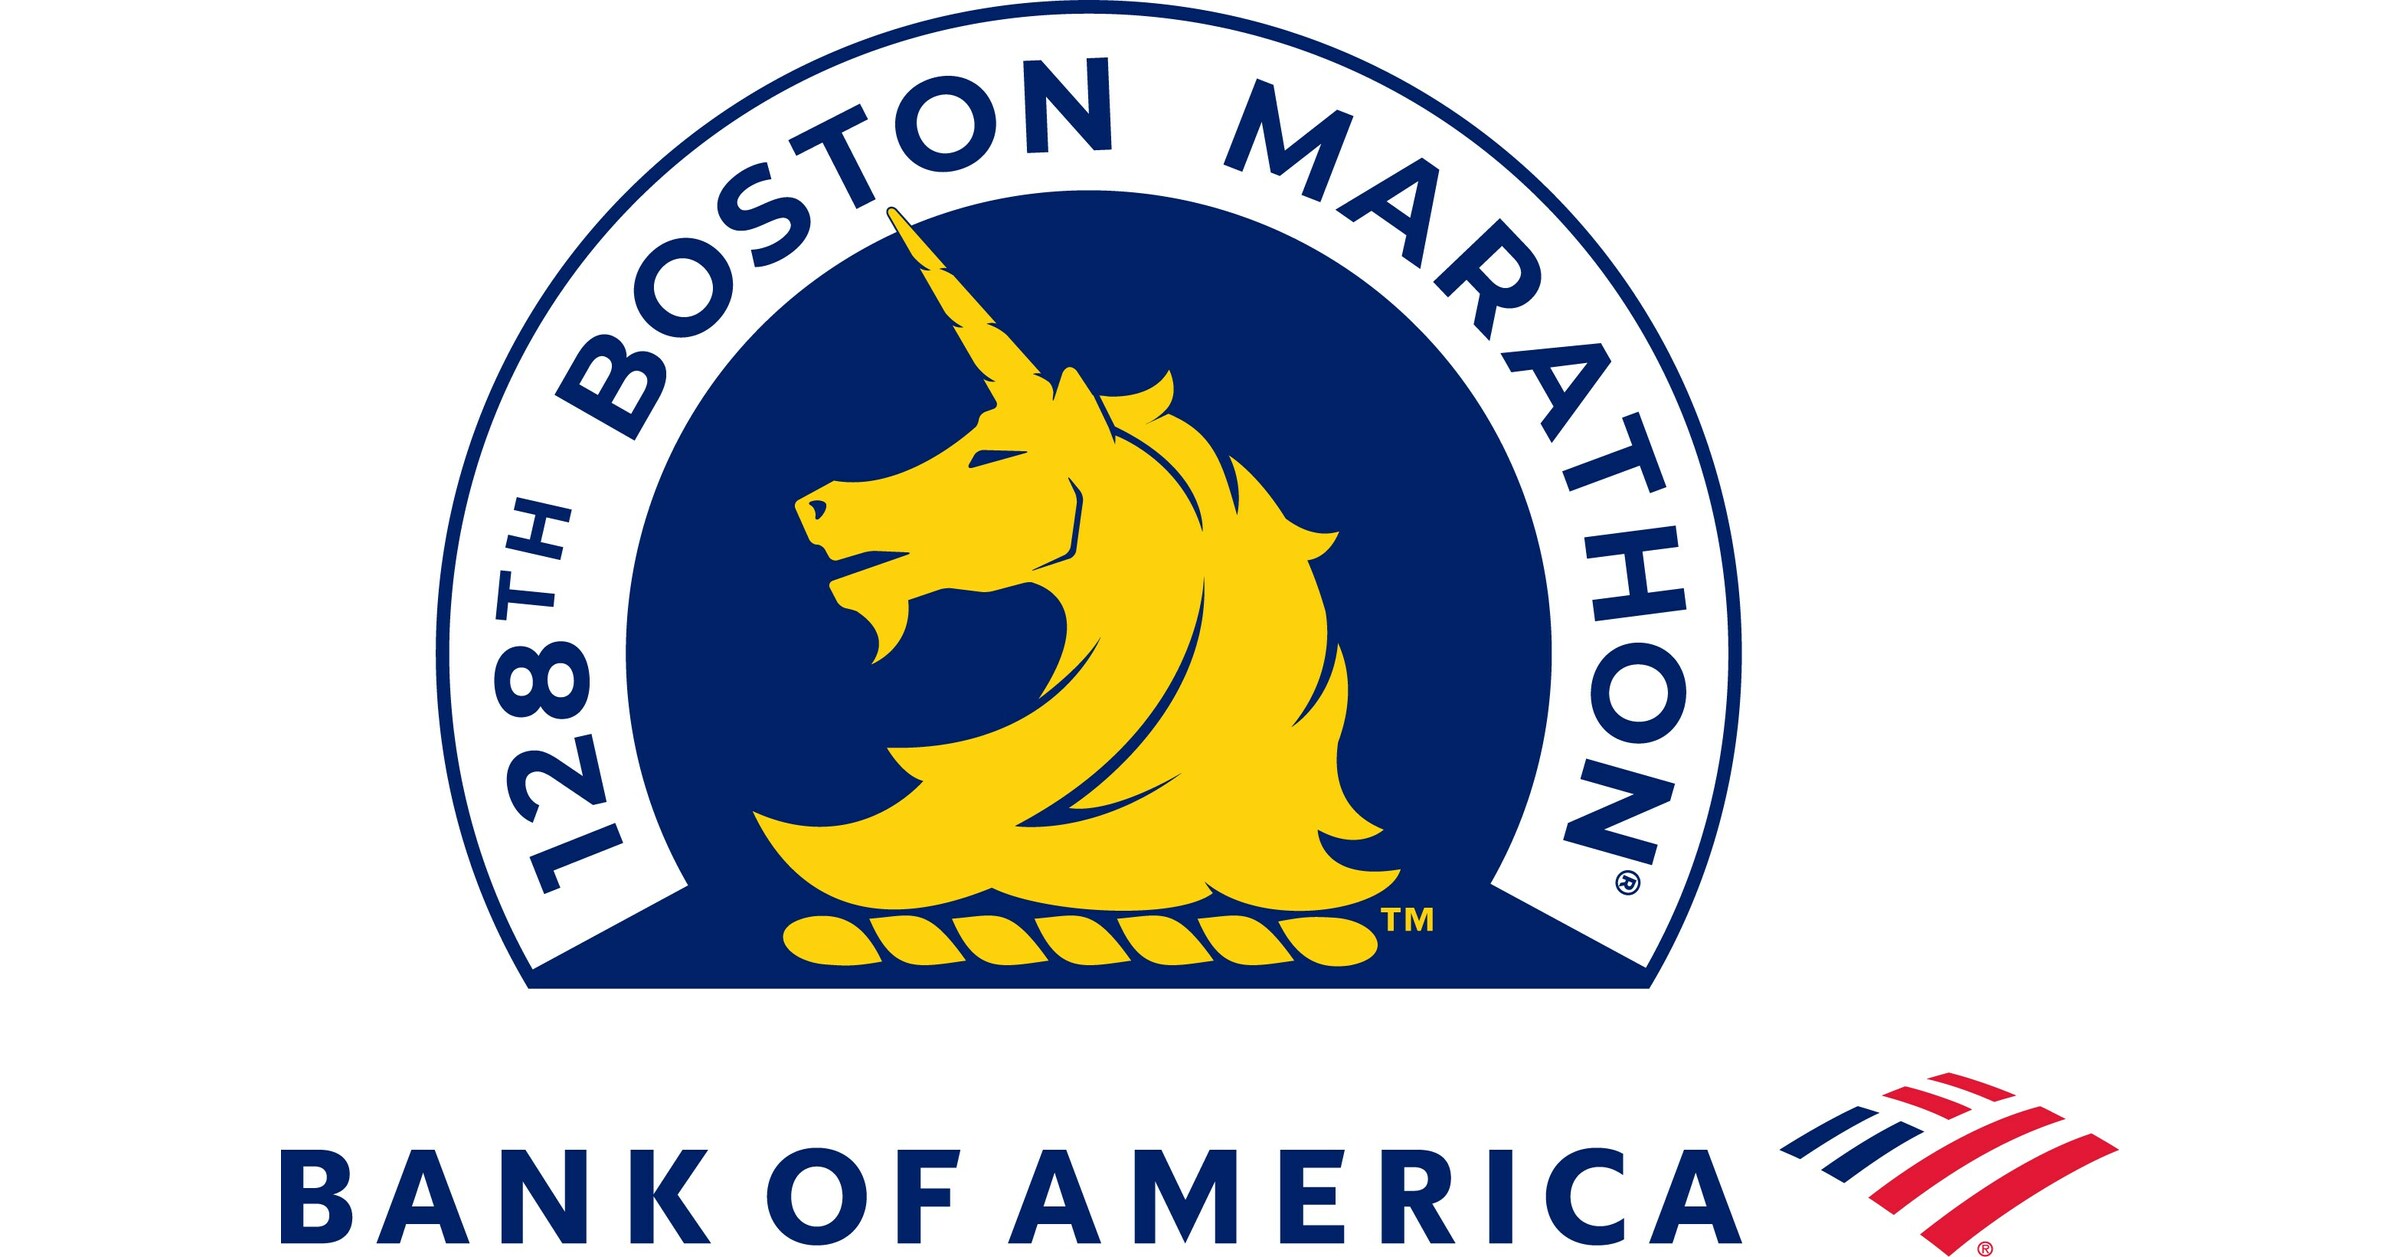 Bank of America to be Presenting Partner of the Boston Marathon